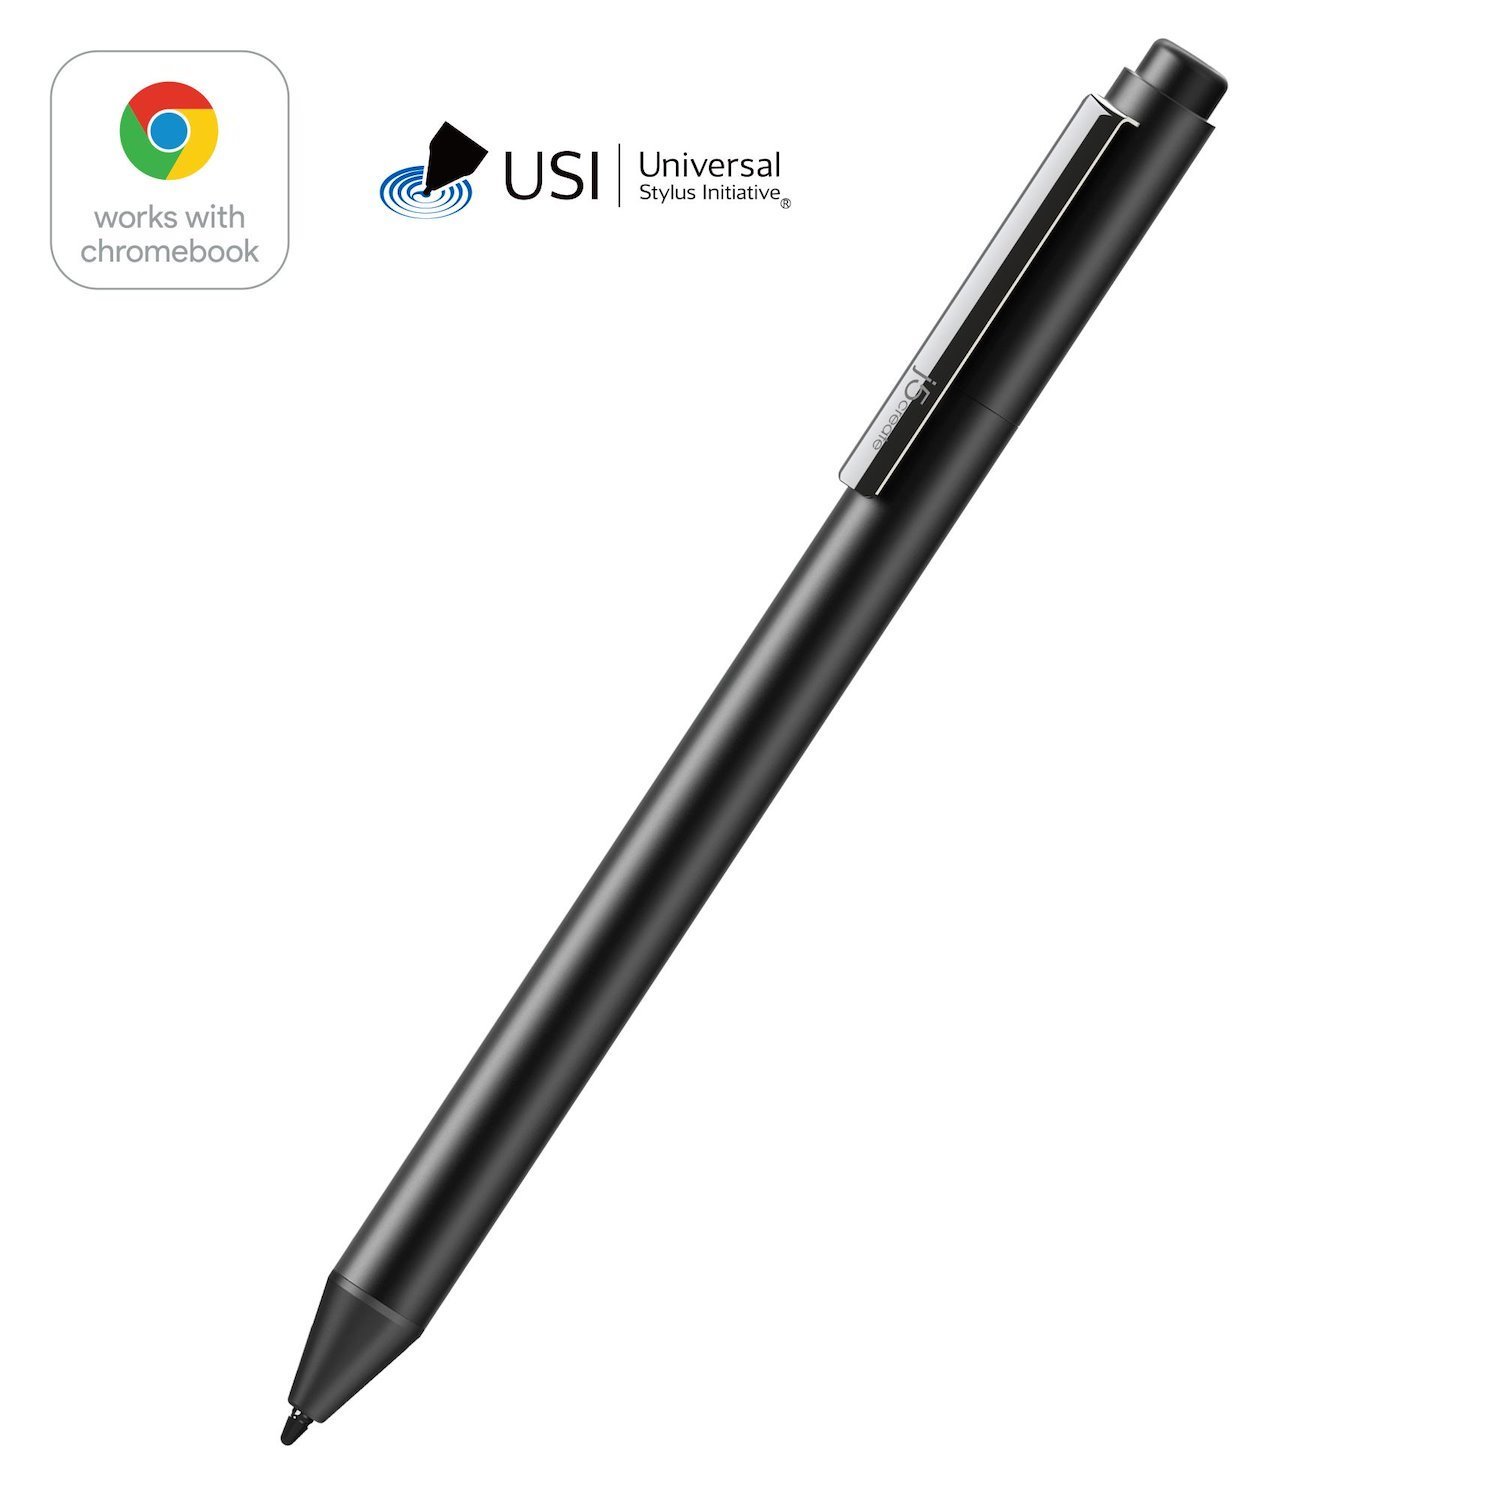 J5create Jitp100 Usi Stylus Pen For Chromebook™ Black (Usi Stylus Pen For Chromebook - )